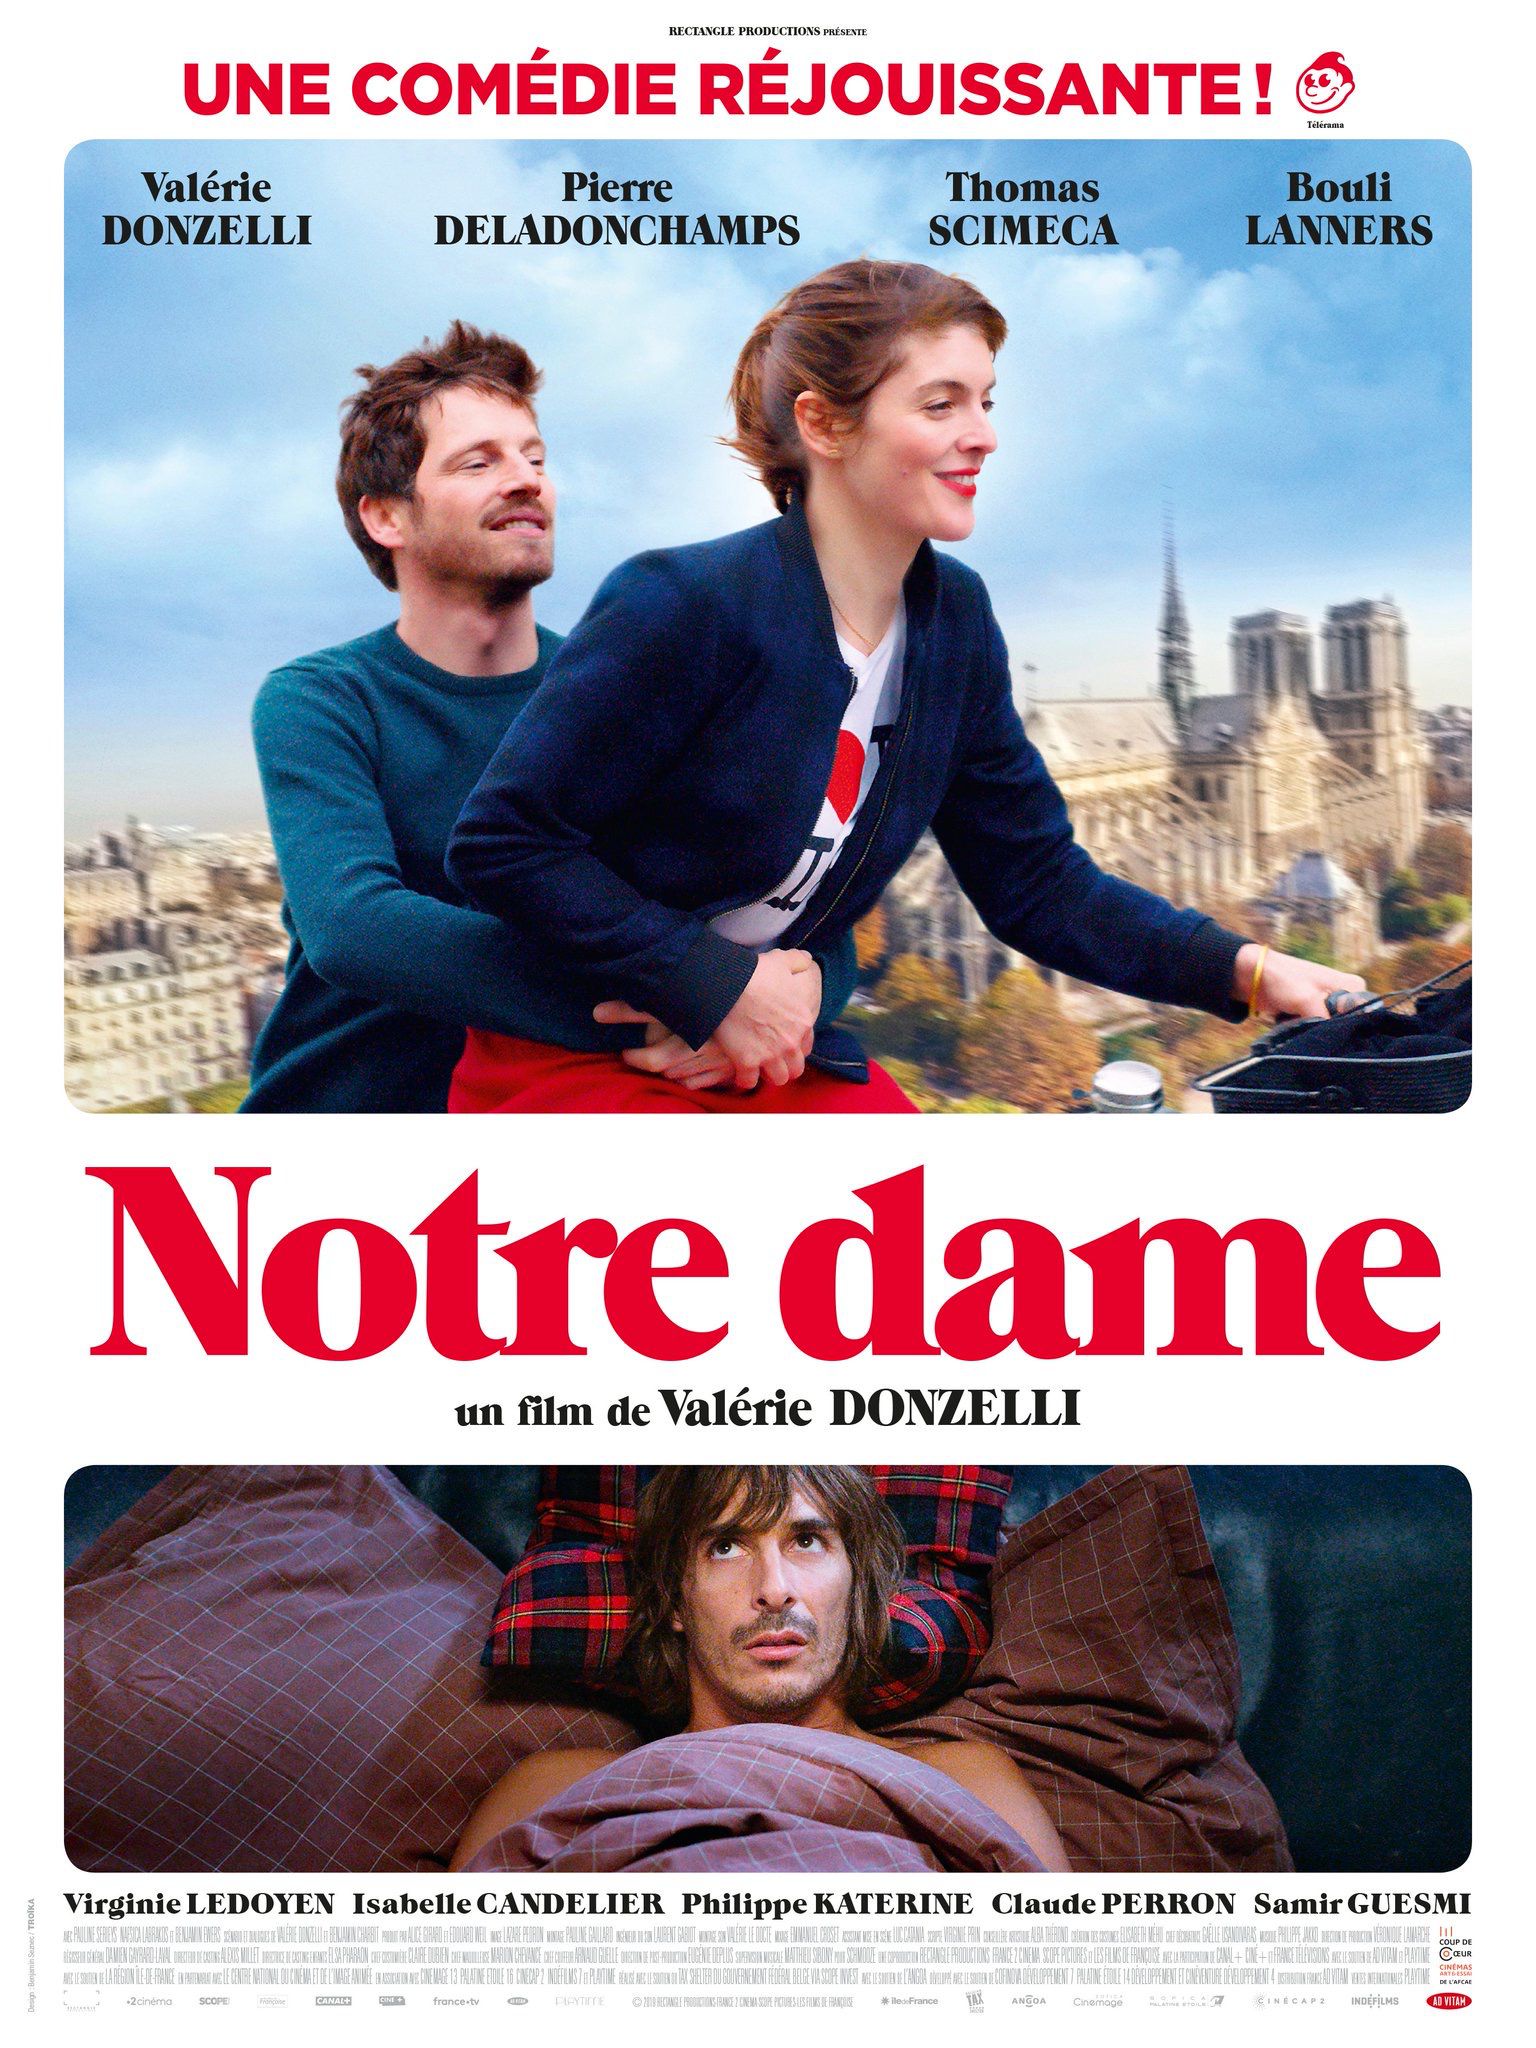 Notre dame - Film (2019)